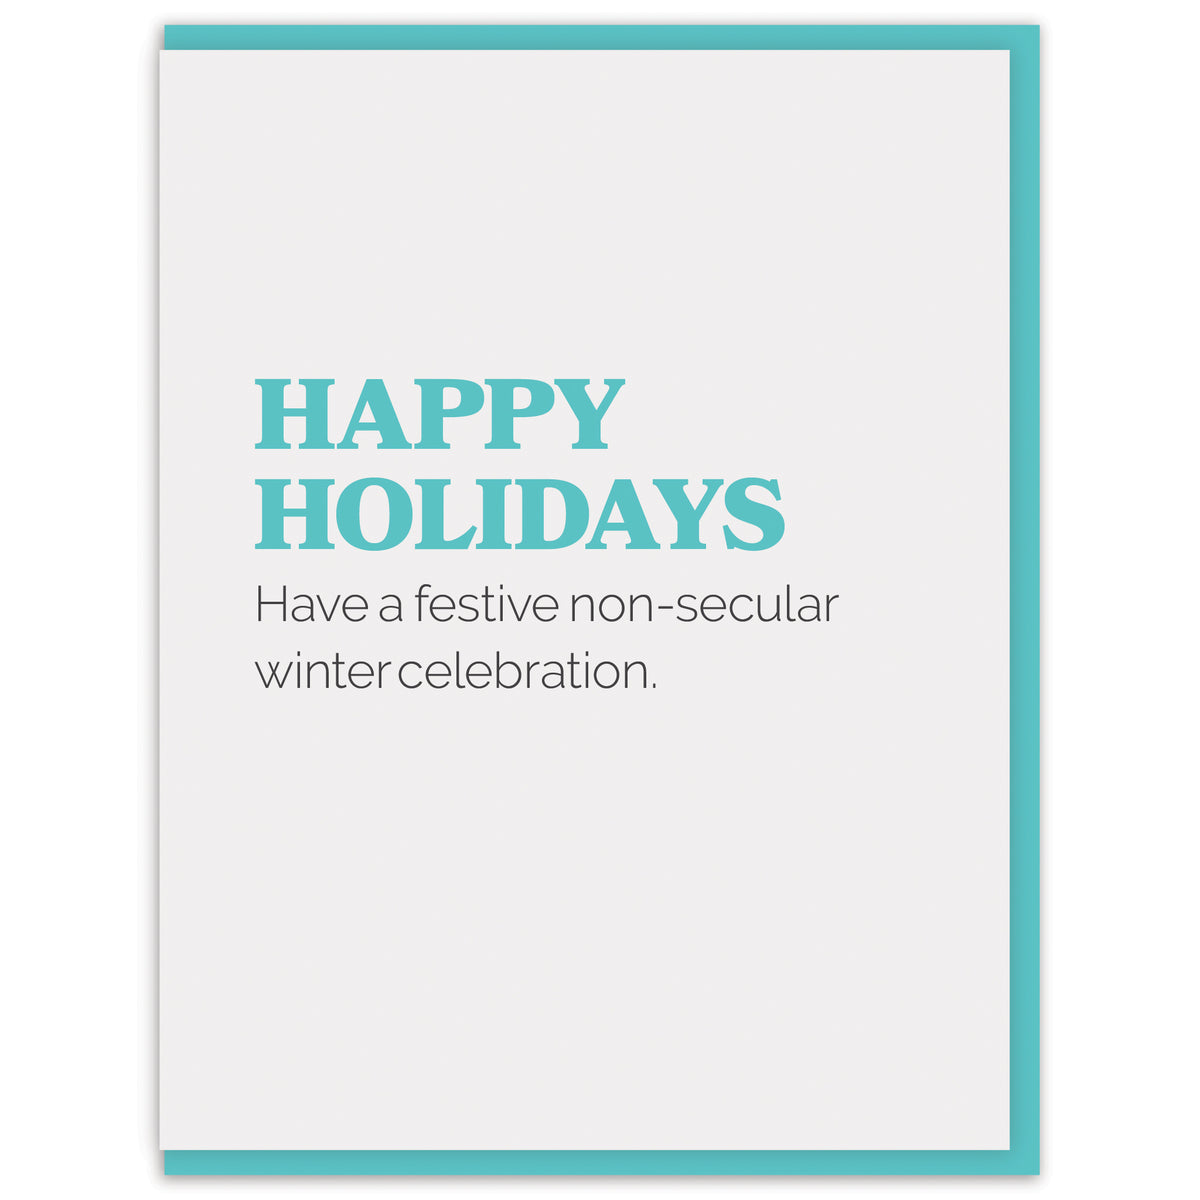 Have a festive non-secular winter celebration